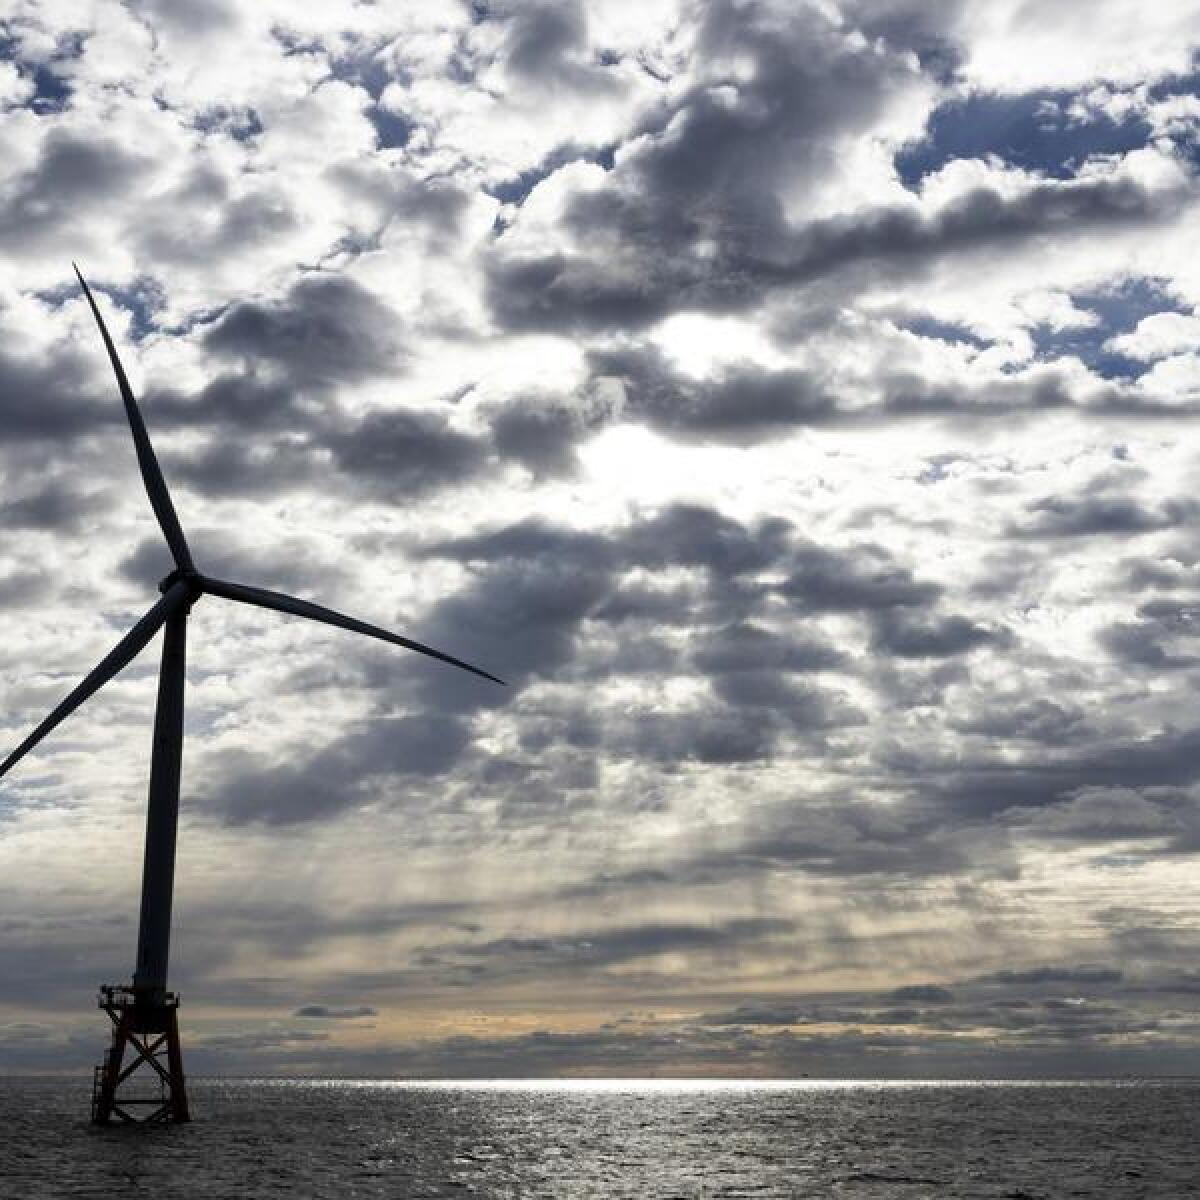 A wind farm turbine off the coast of Rhode Island, USA